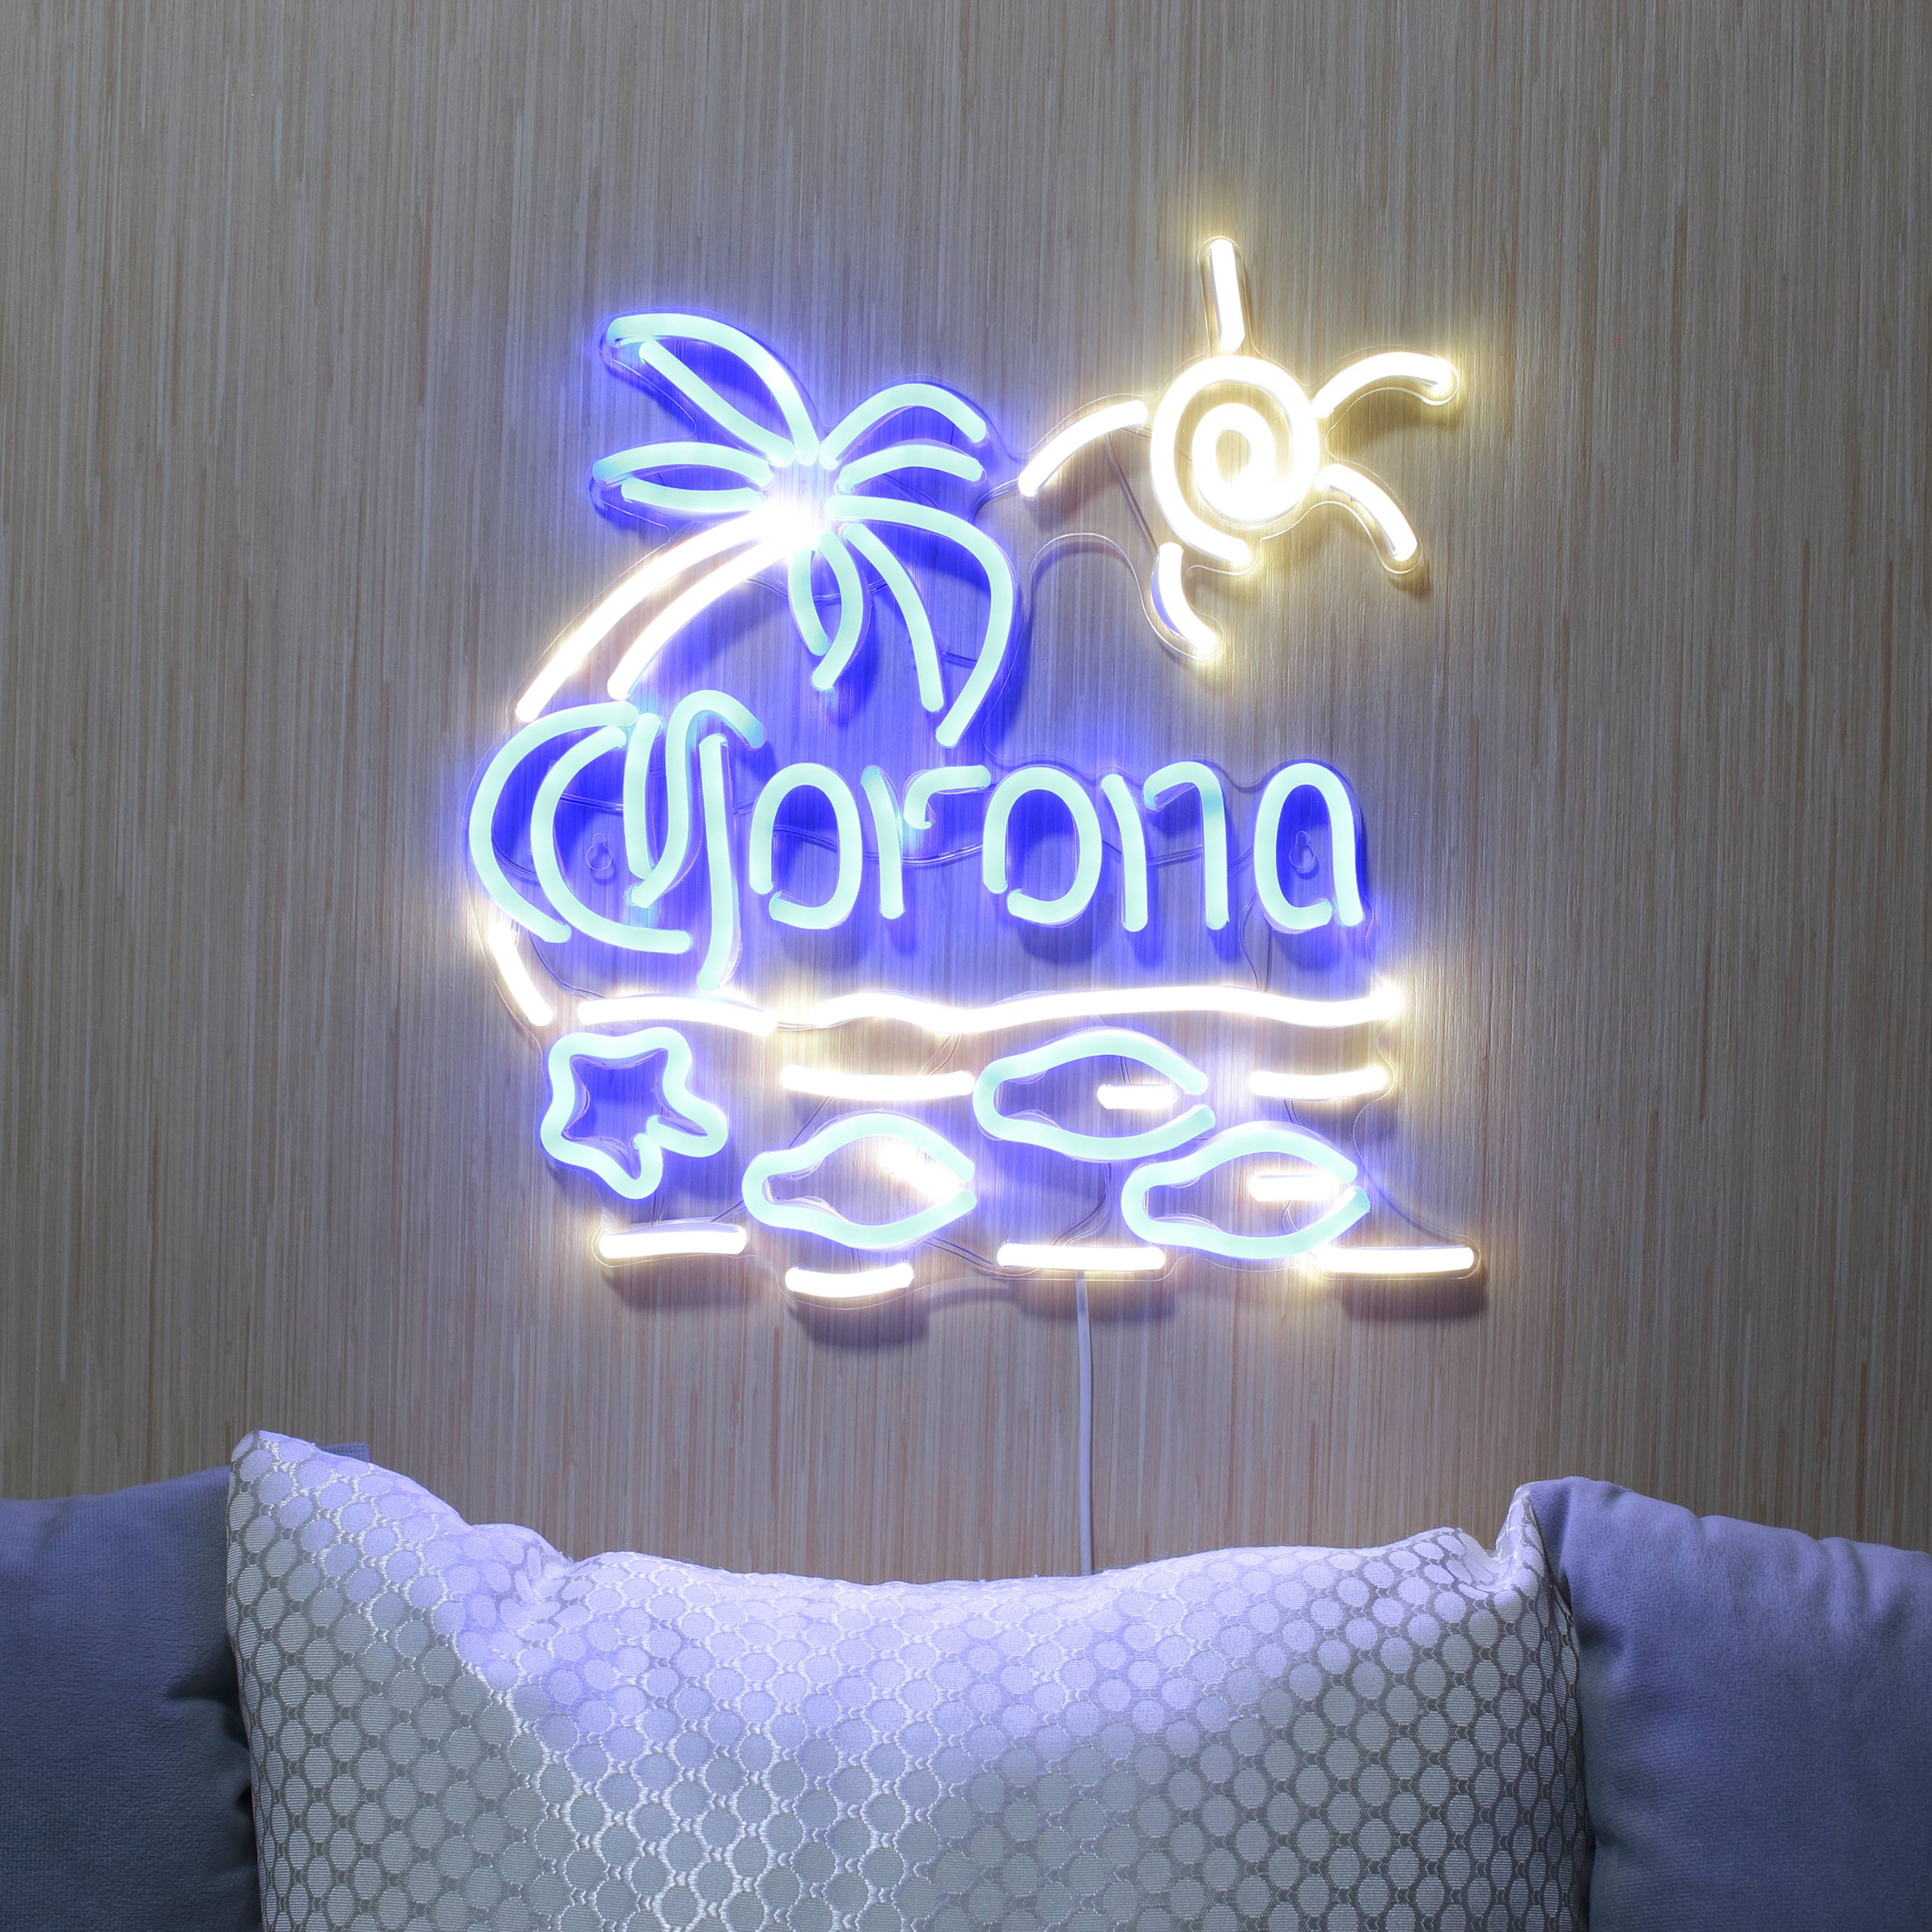 Corona Beach Large Flex Neon LED Sign